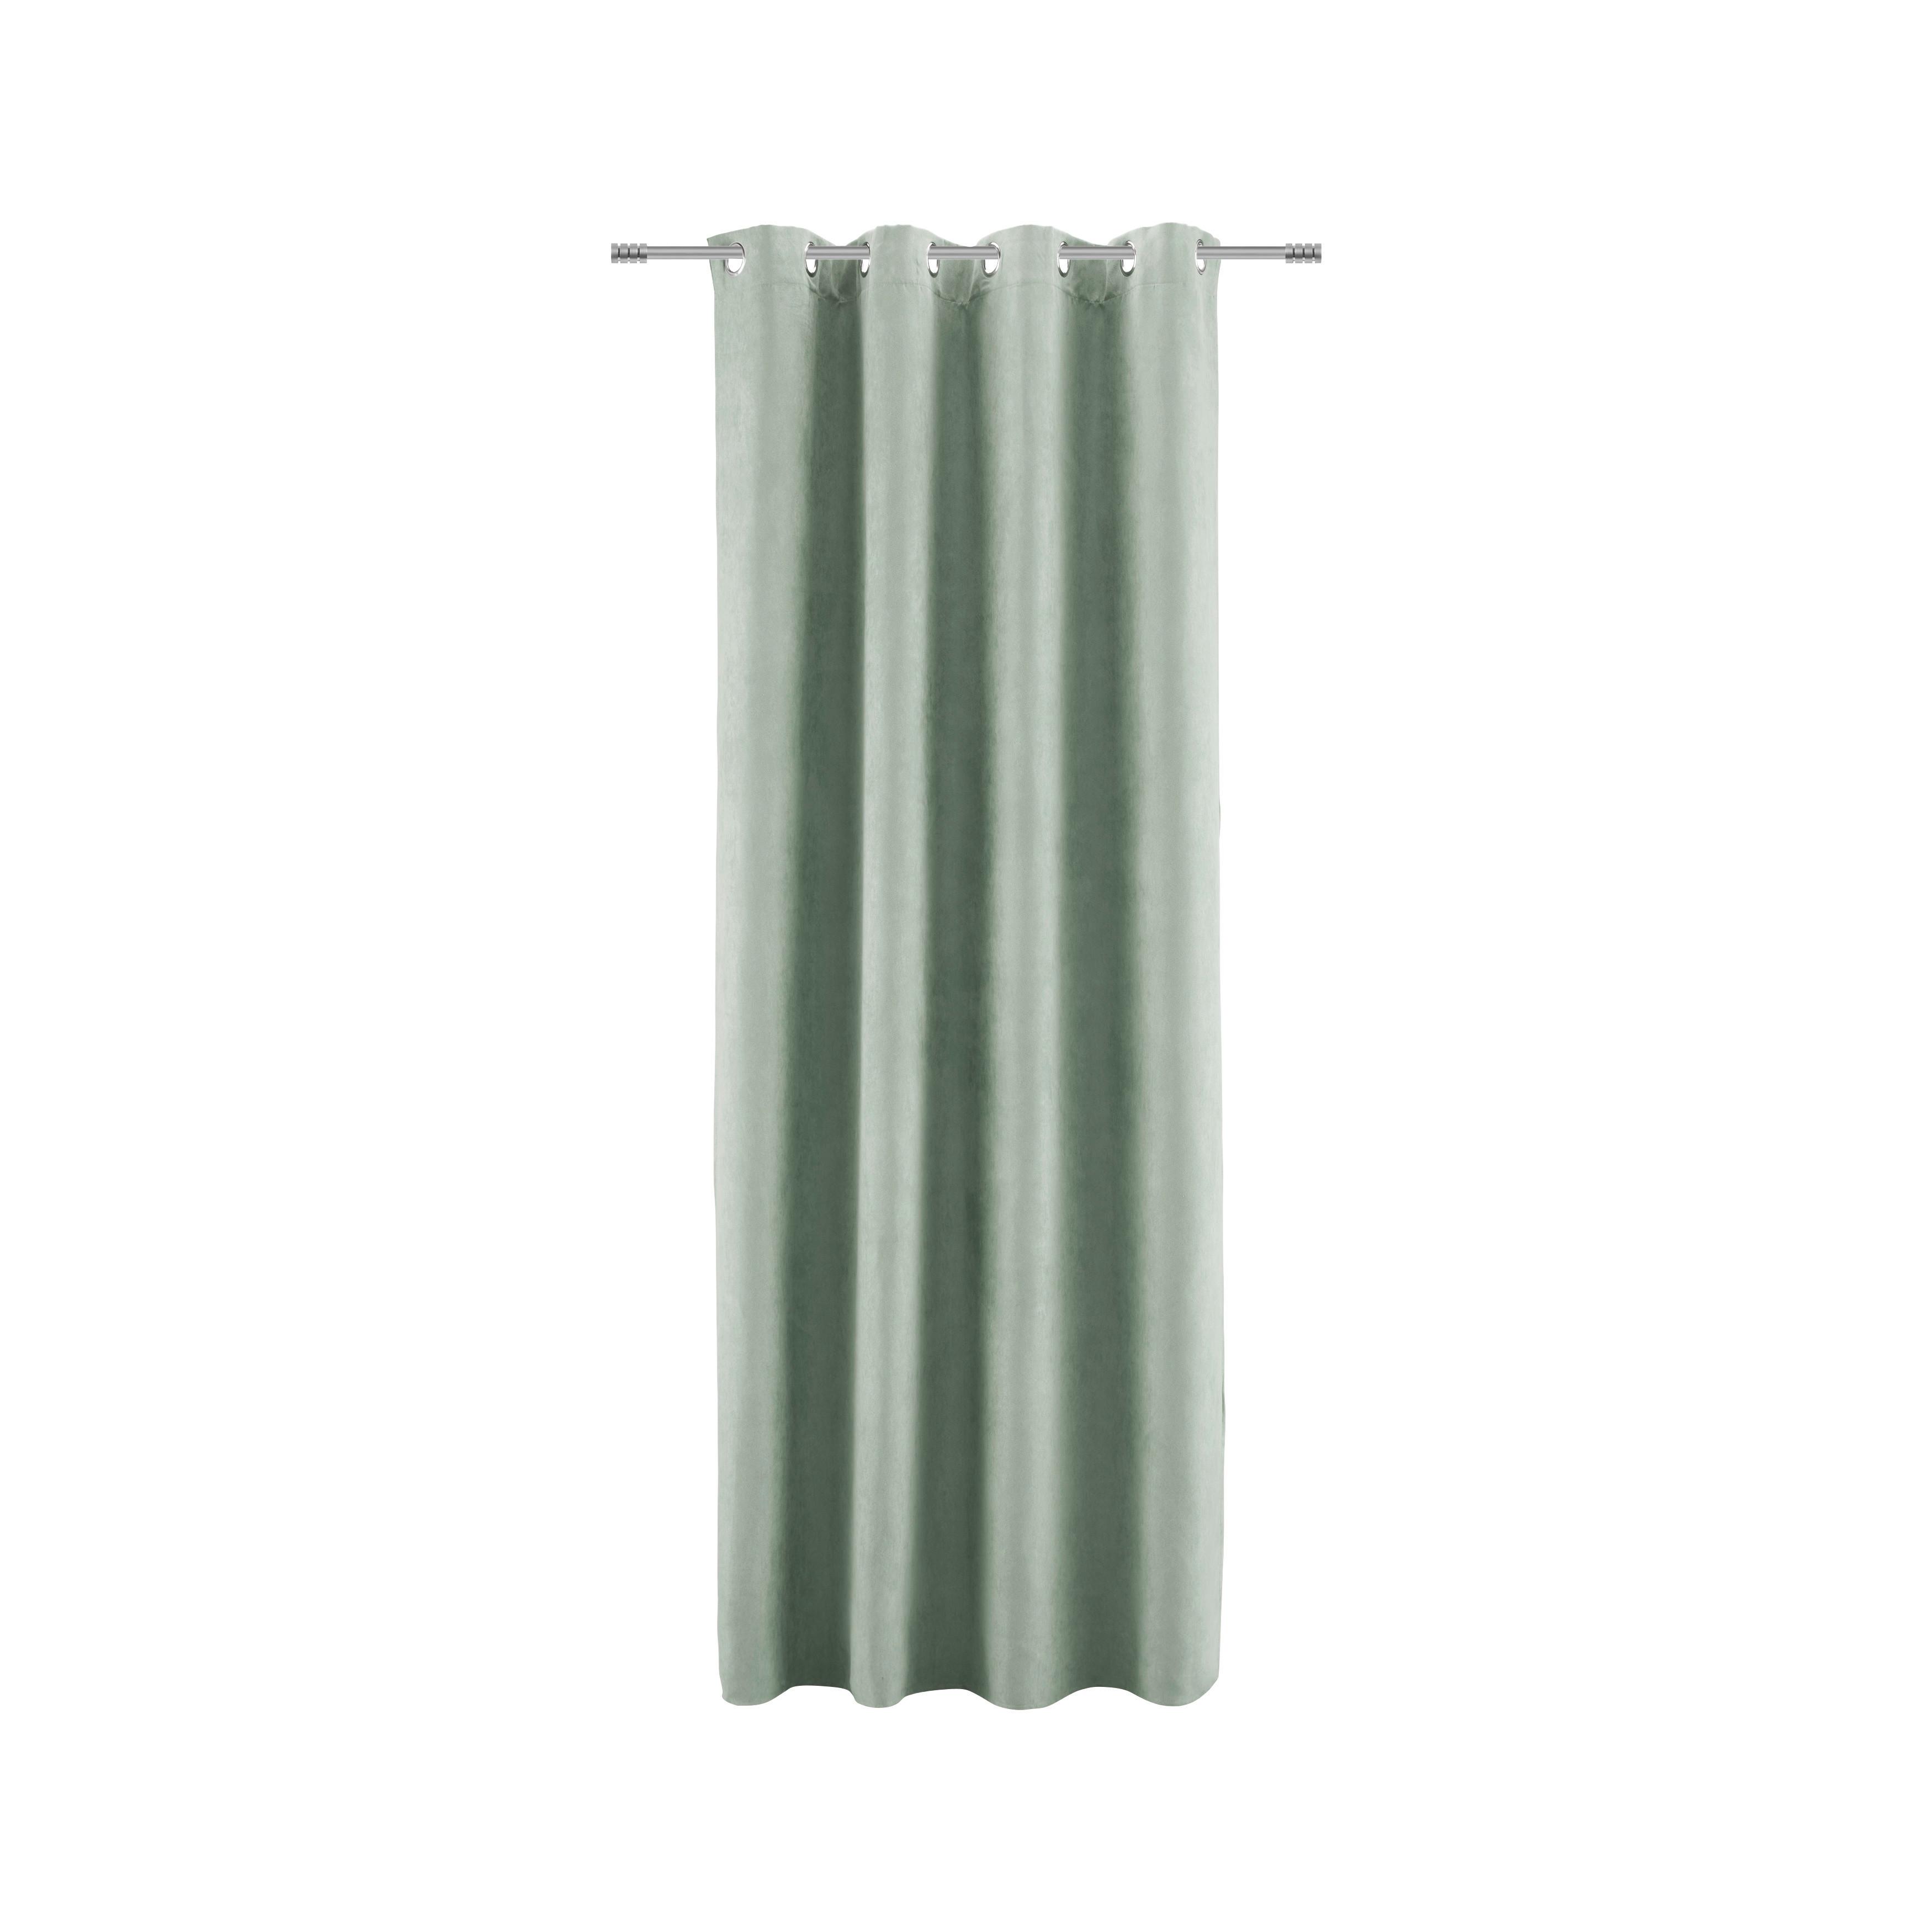 Perdea cu inele tip capsă Velours - verde, Konventionell, textil (140/245cm) - Modern Living